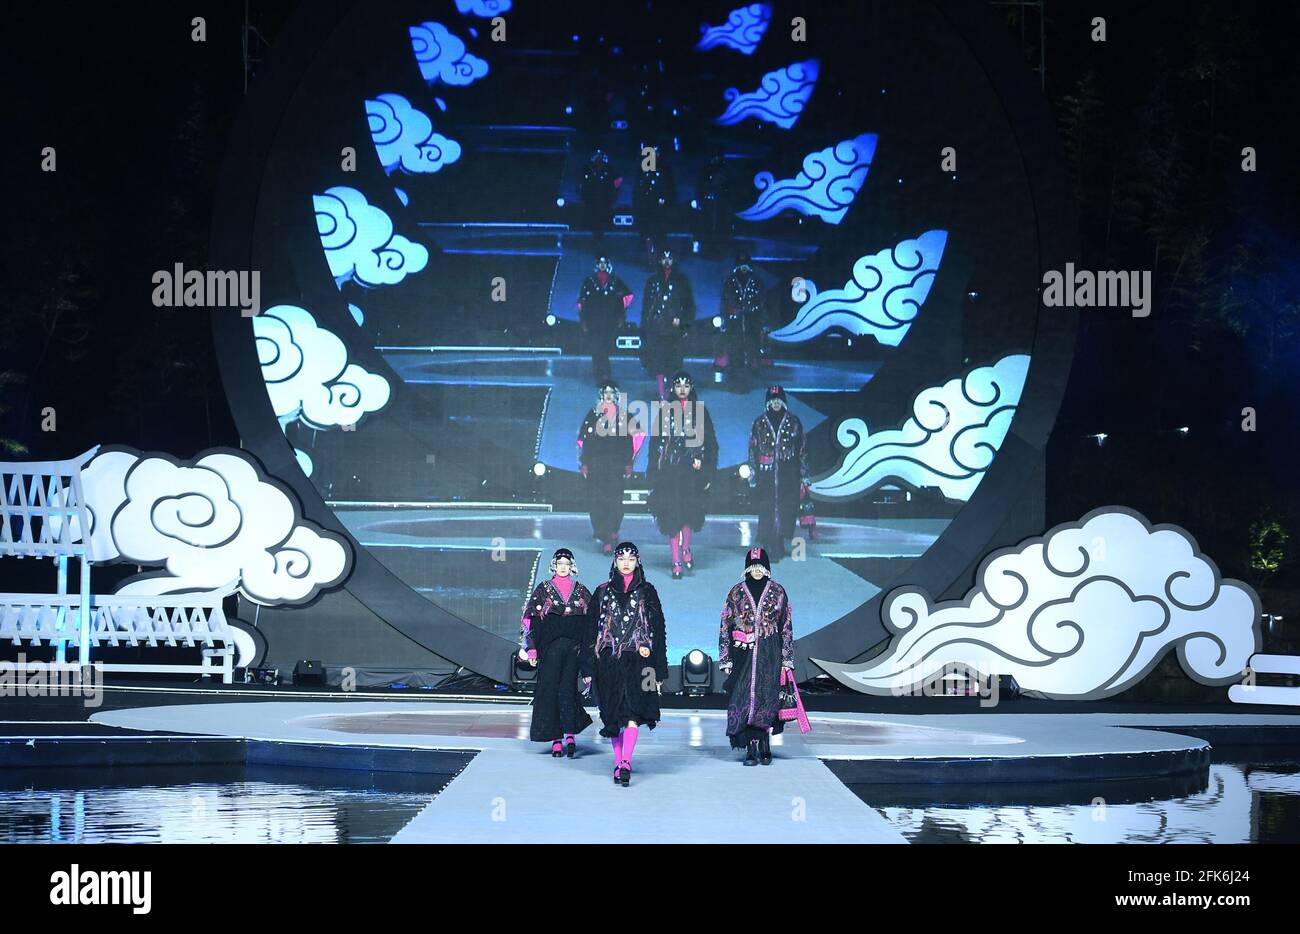 Hangzhou, China. April 2021. Am 29. April 2021 findet in Hangzhou, Zhejiang, China, die 3. Ausstellung ethnischer Kostümdesigns statt.(Foto: TPG/cnsphotos) Quelle: TopPhoto/Alamy Live News Stockfoto